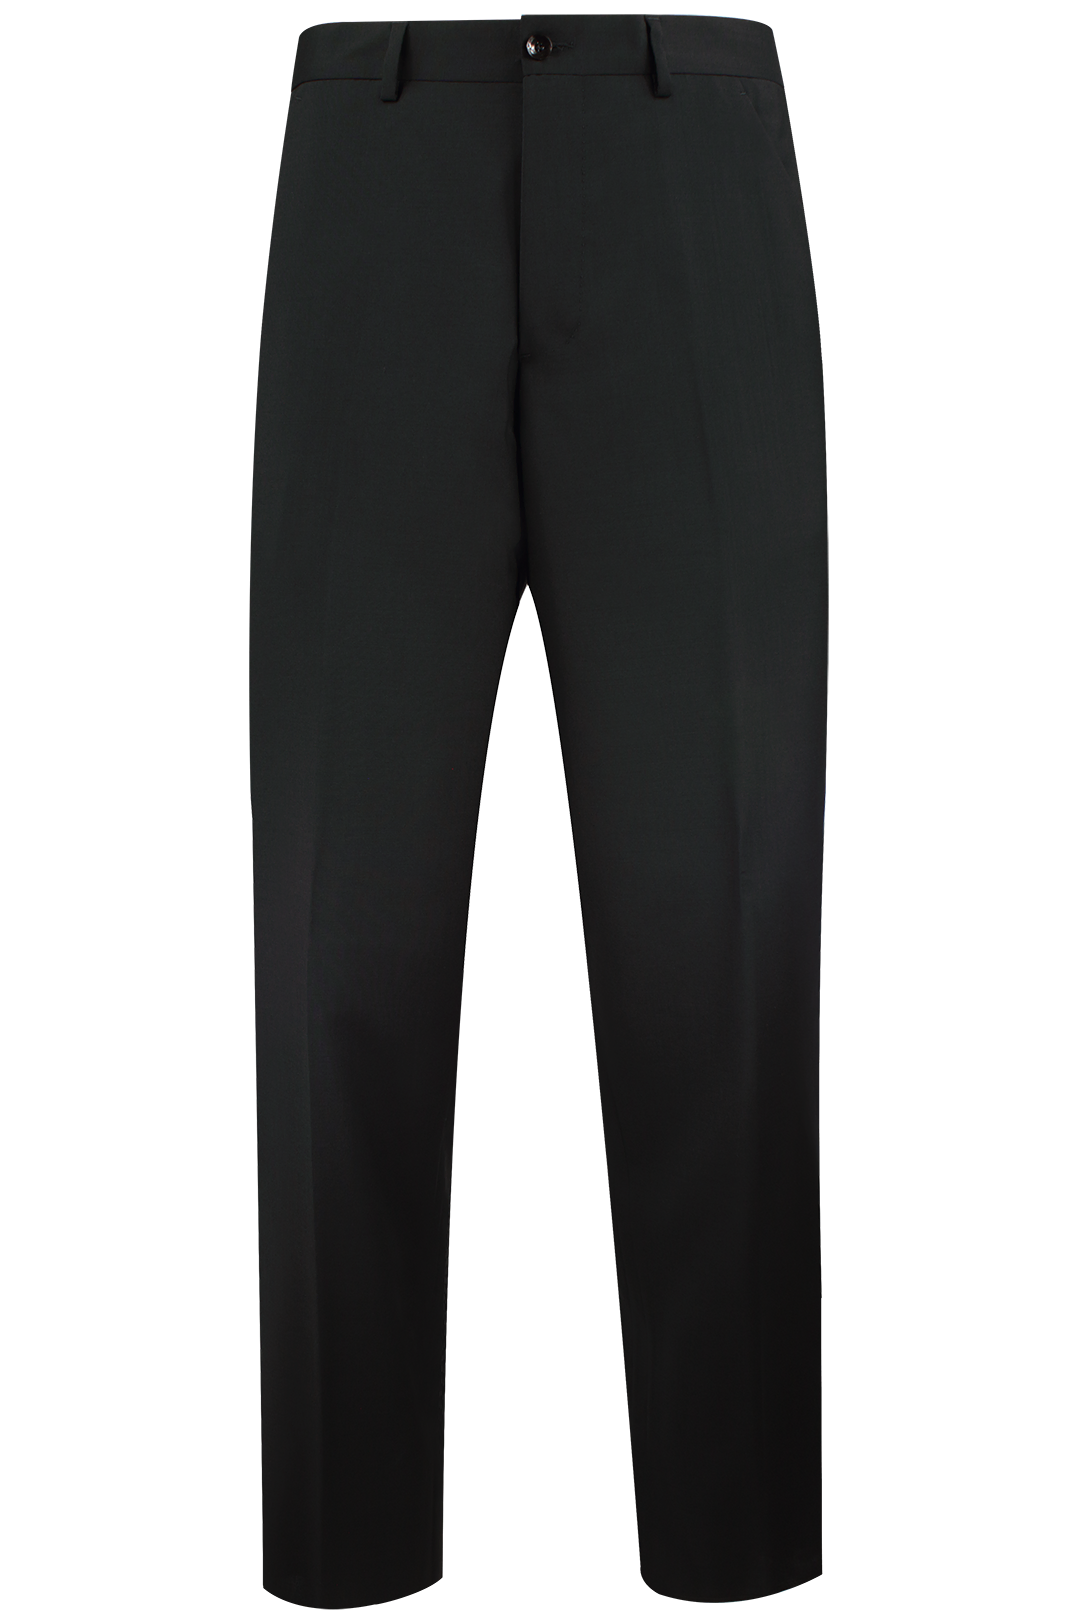 Pantalone in lana nera con banda laterale bianca